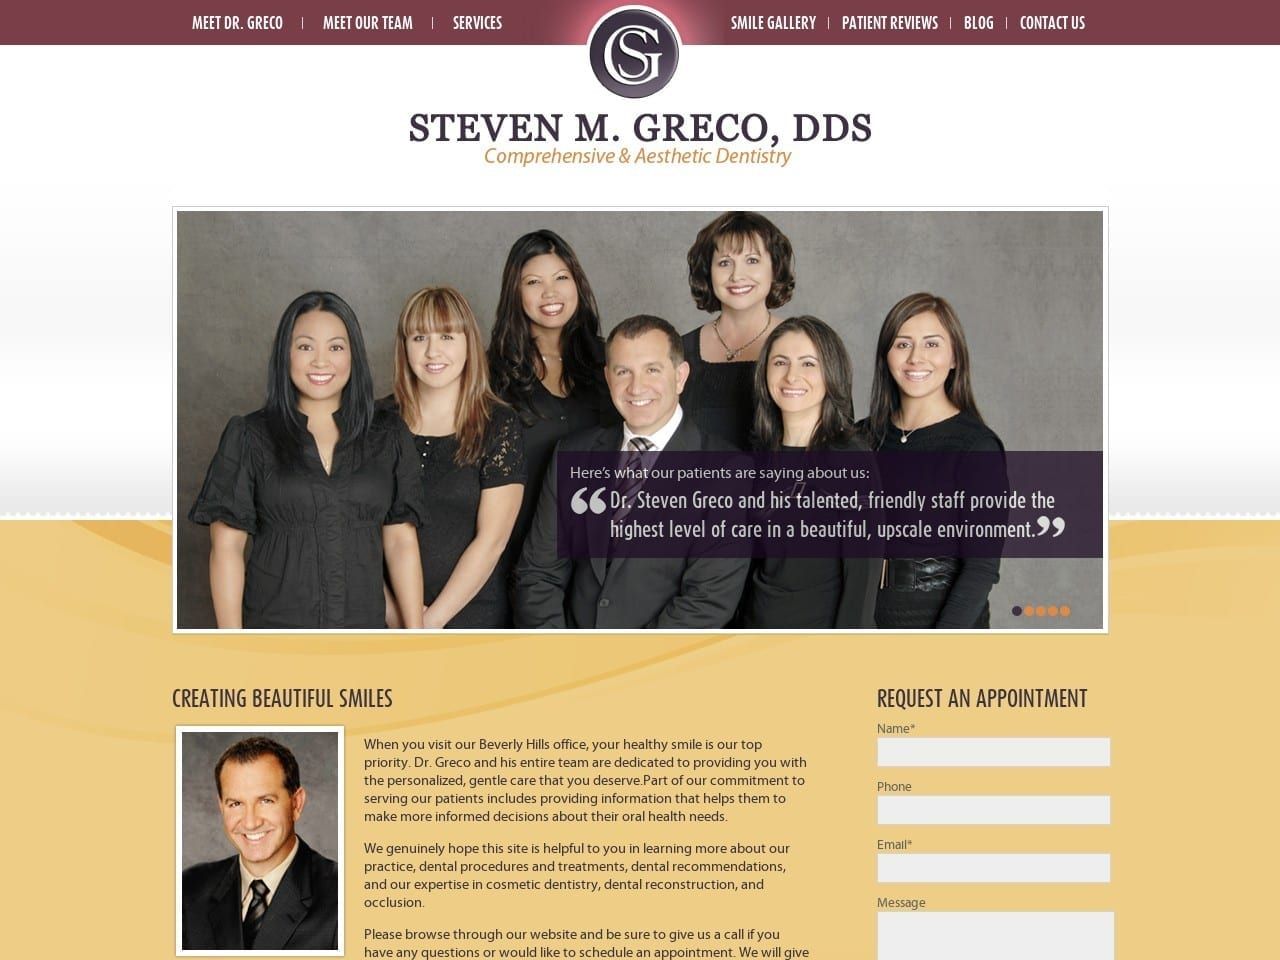 Steven M. Greco DDS Inc. Website Screenshot from grecodds.com